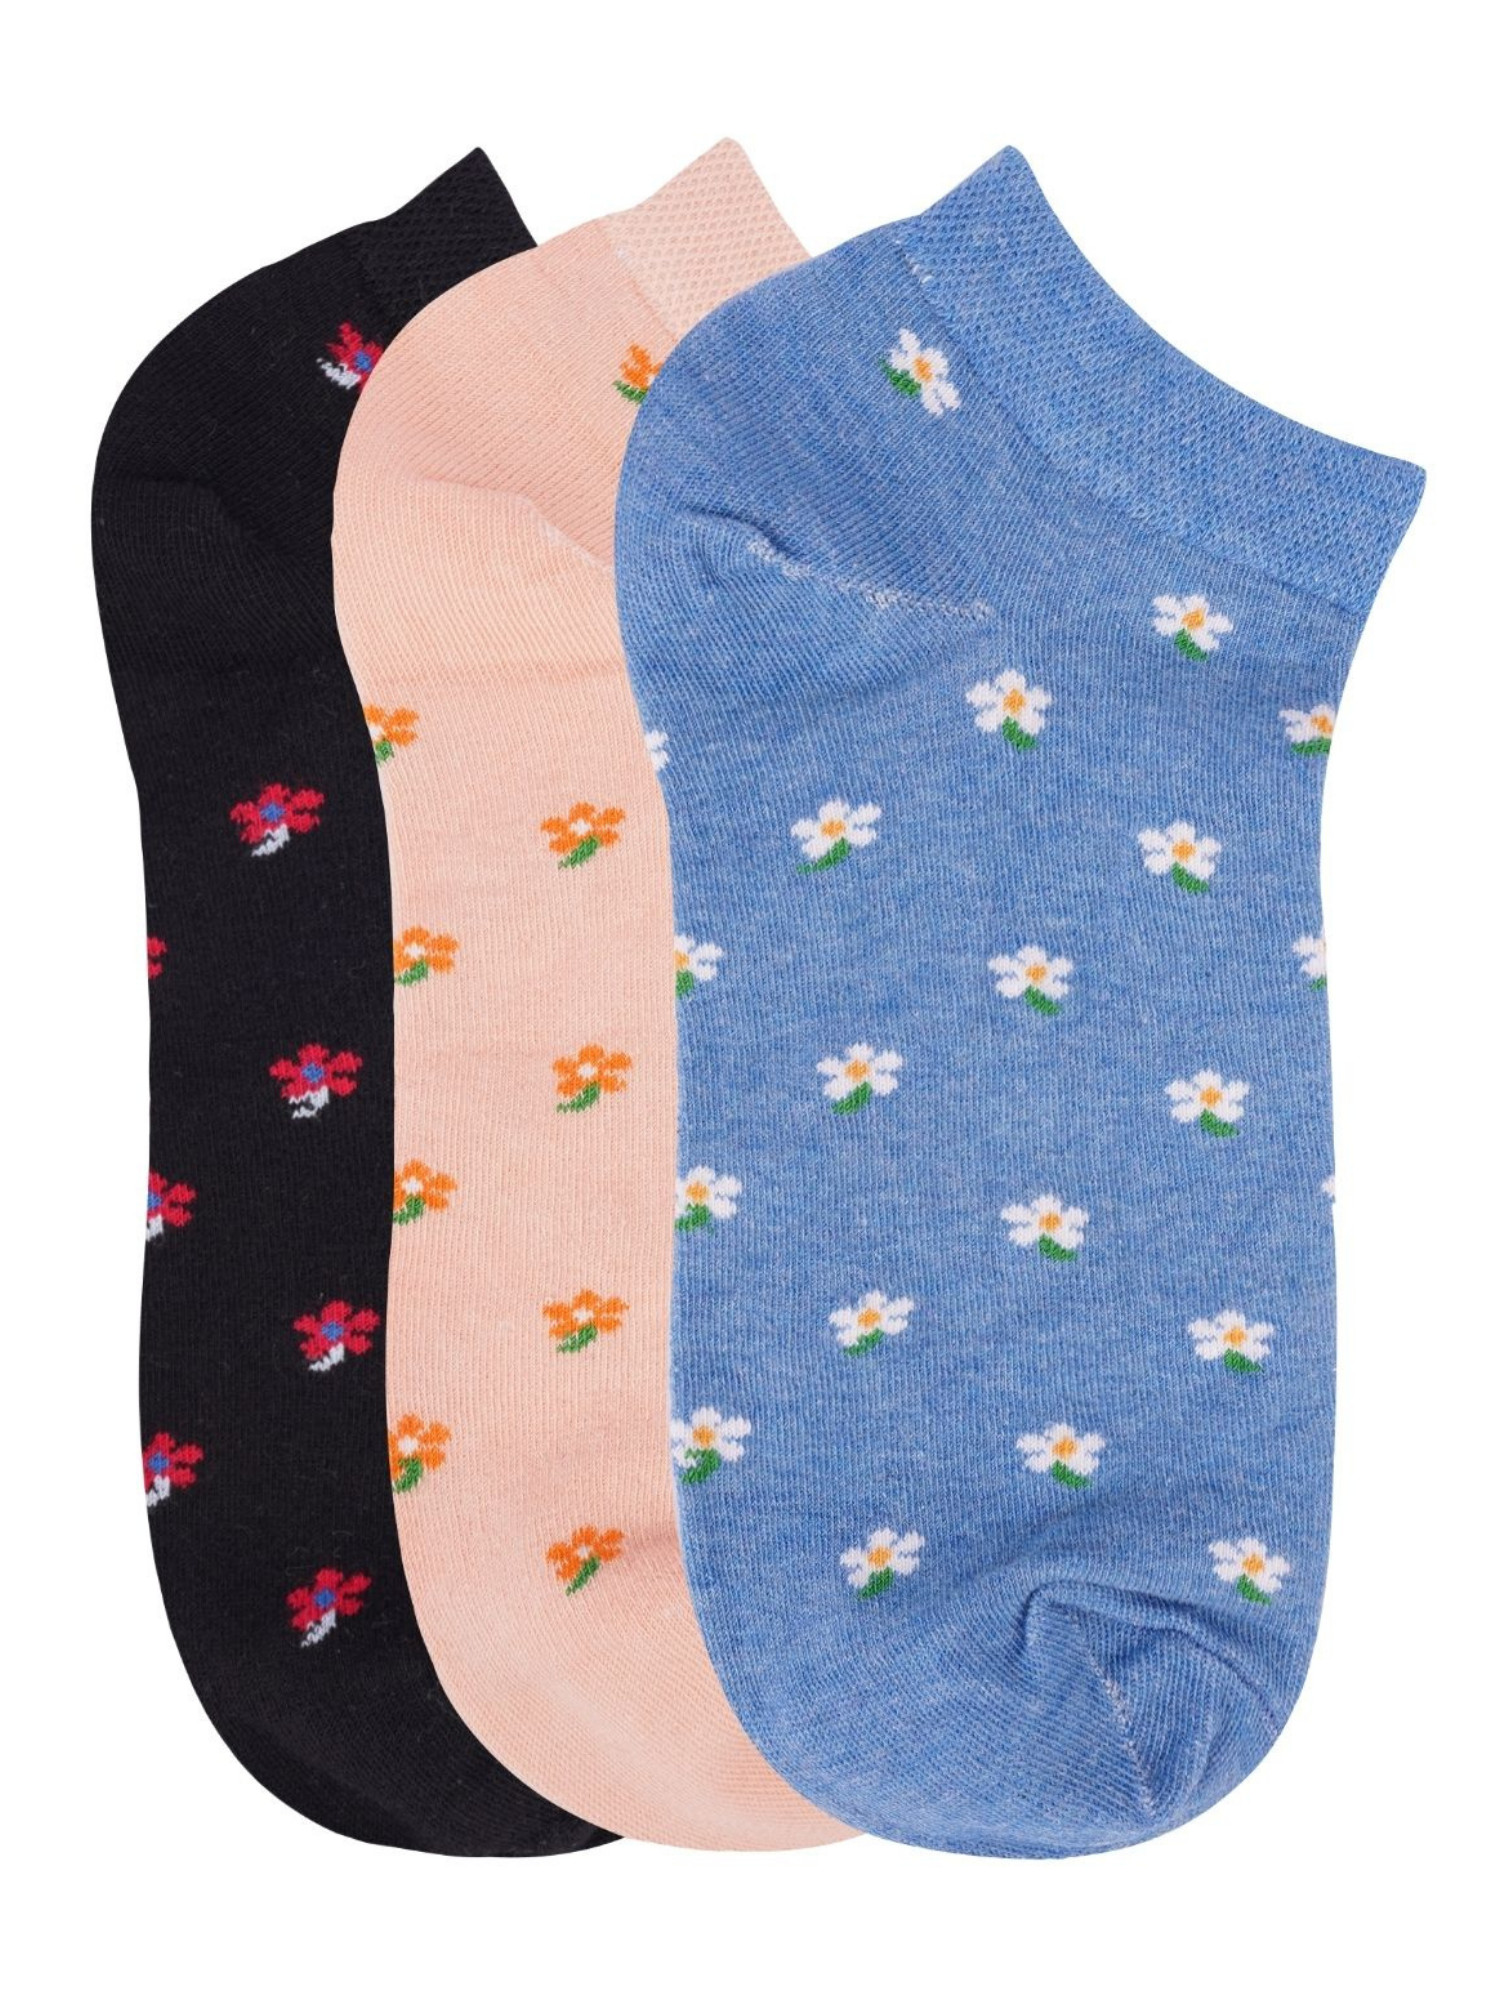 N2S NEXT2SKIN Women's Low Ankle Length Flower Pattern Cotton Socks (Pack of 3) (Black:Peach:Blue)